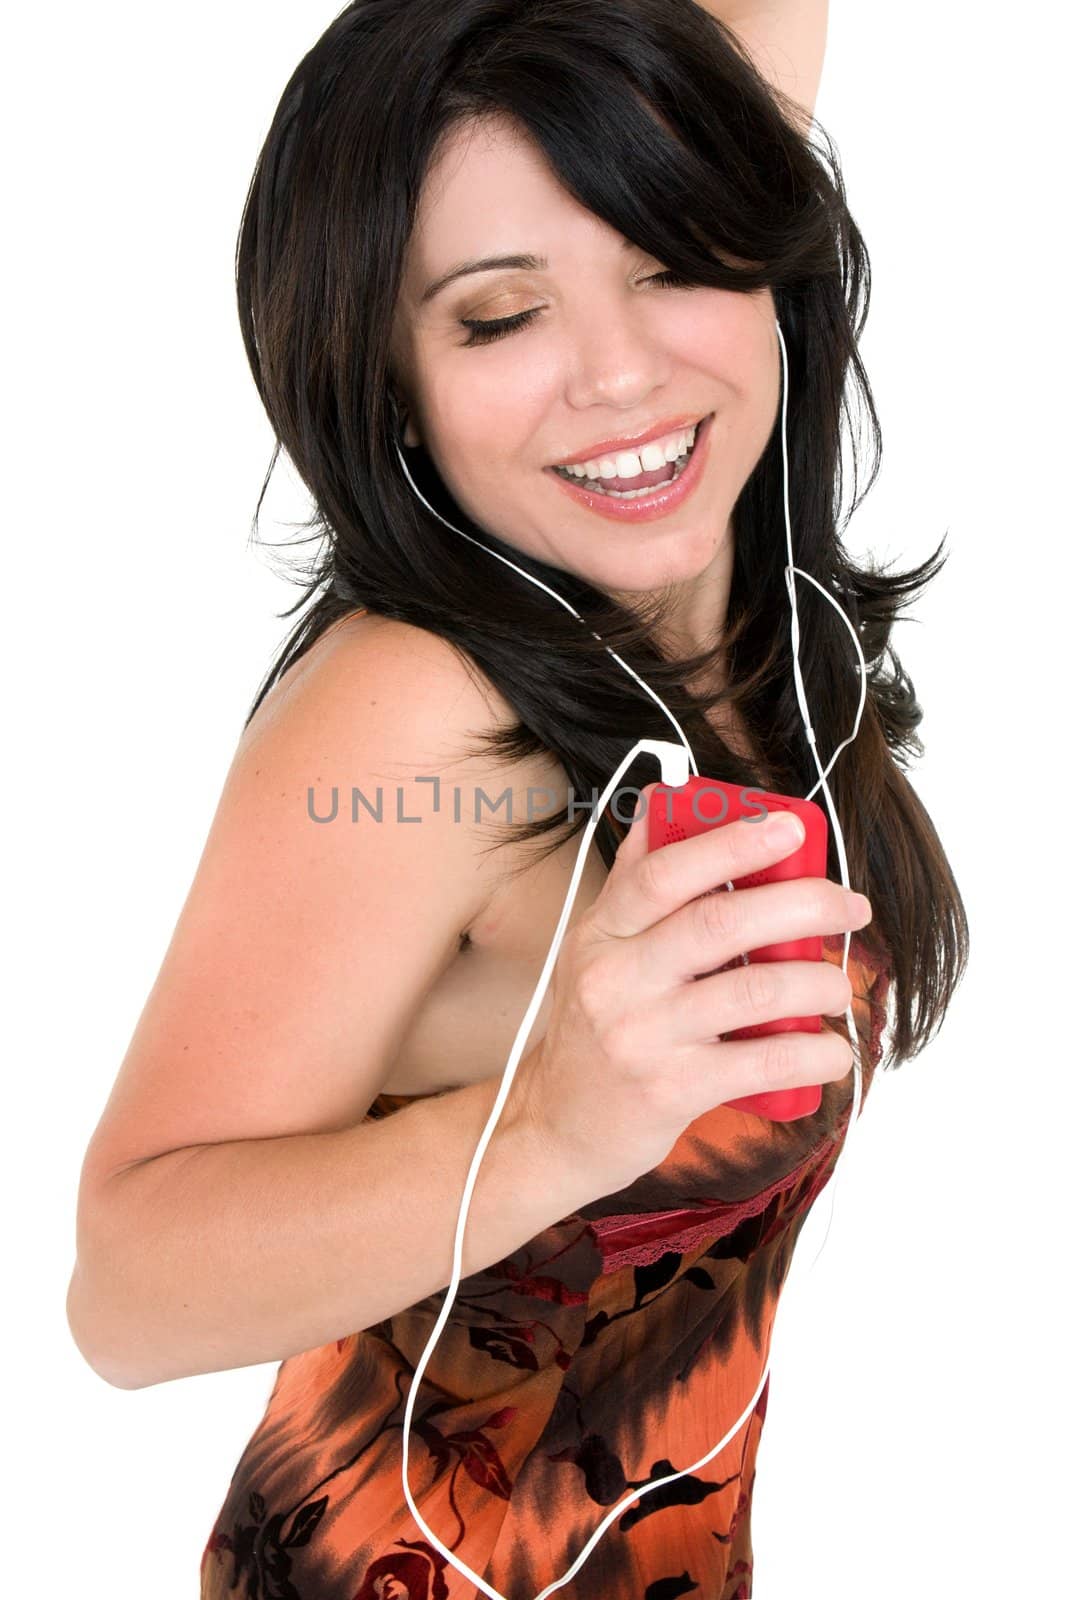 Woman enjoying music by lovleah